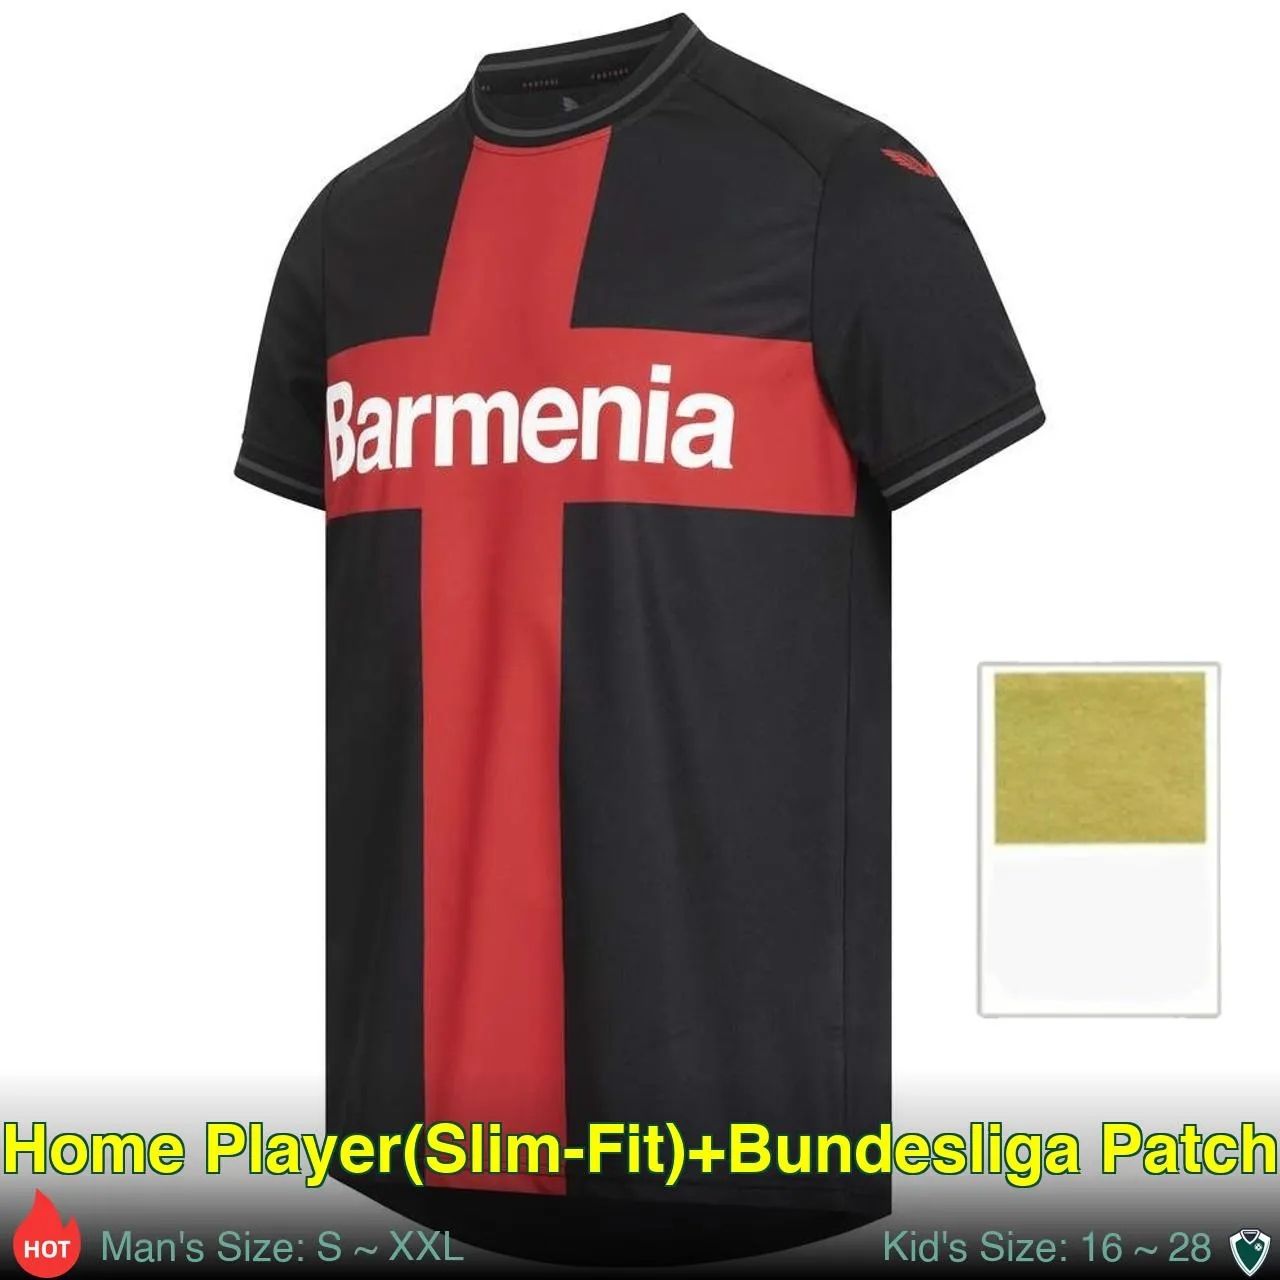 Home Player+Bundesliga Patch